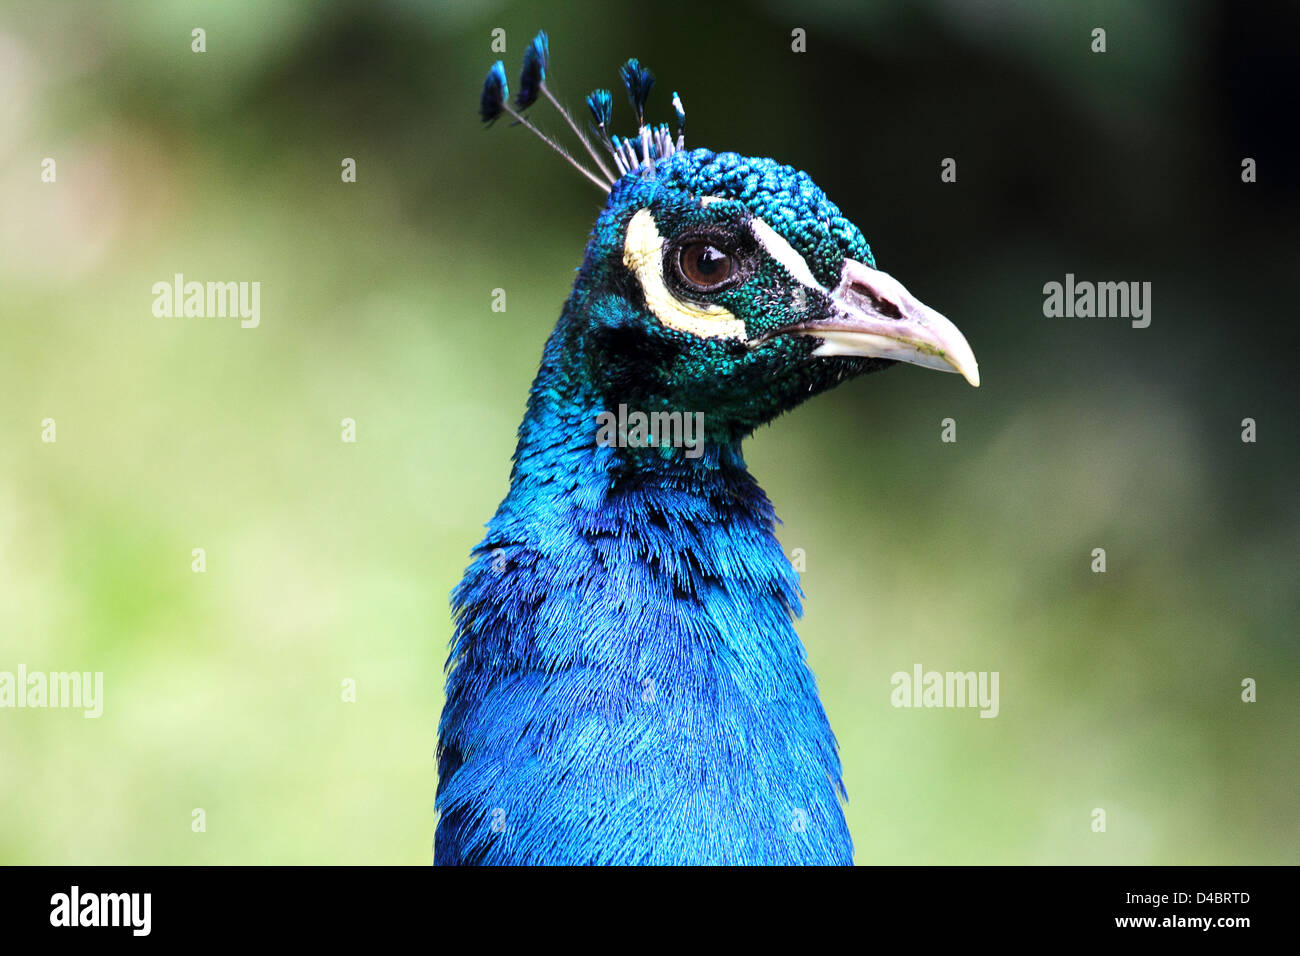 Closeup of a colorful peacock (Pavo cristatus) Stock Photo